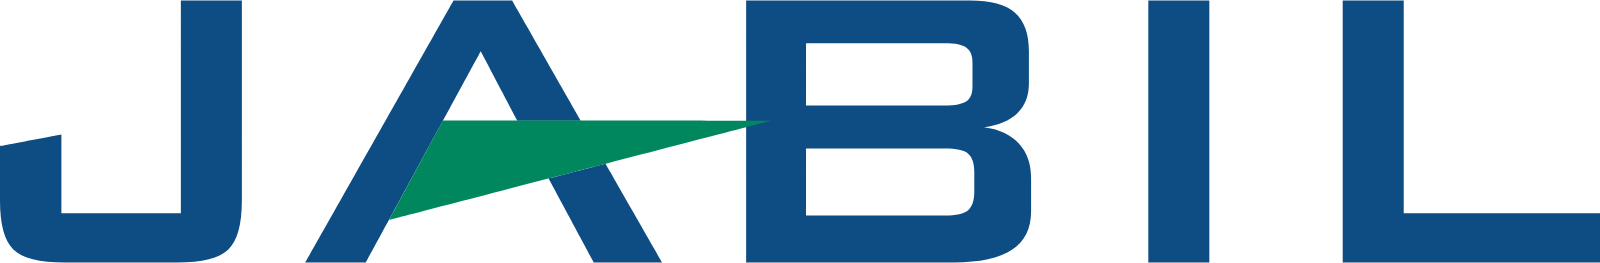 Jabil logo large (transparent PNG)